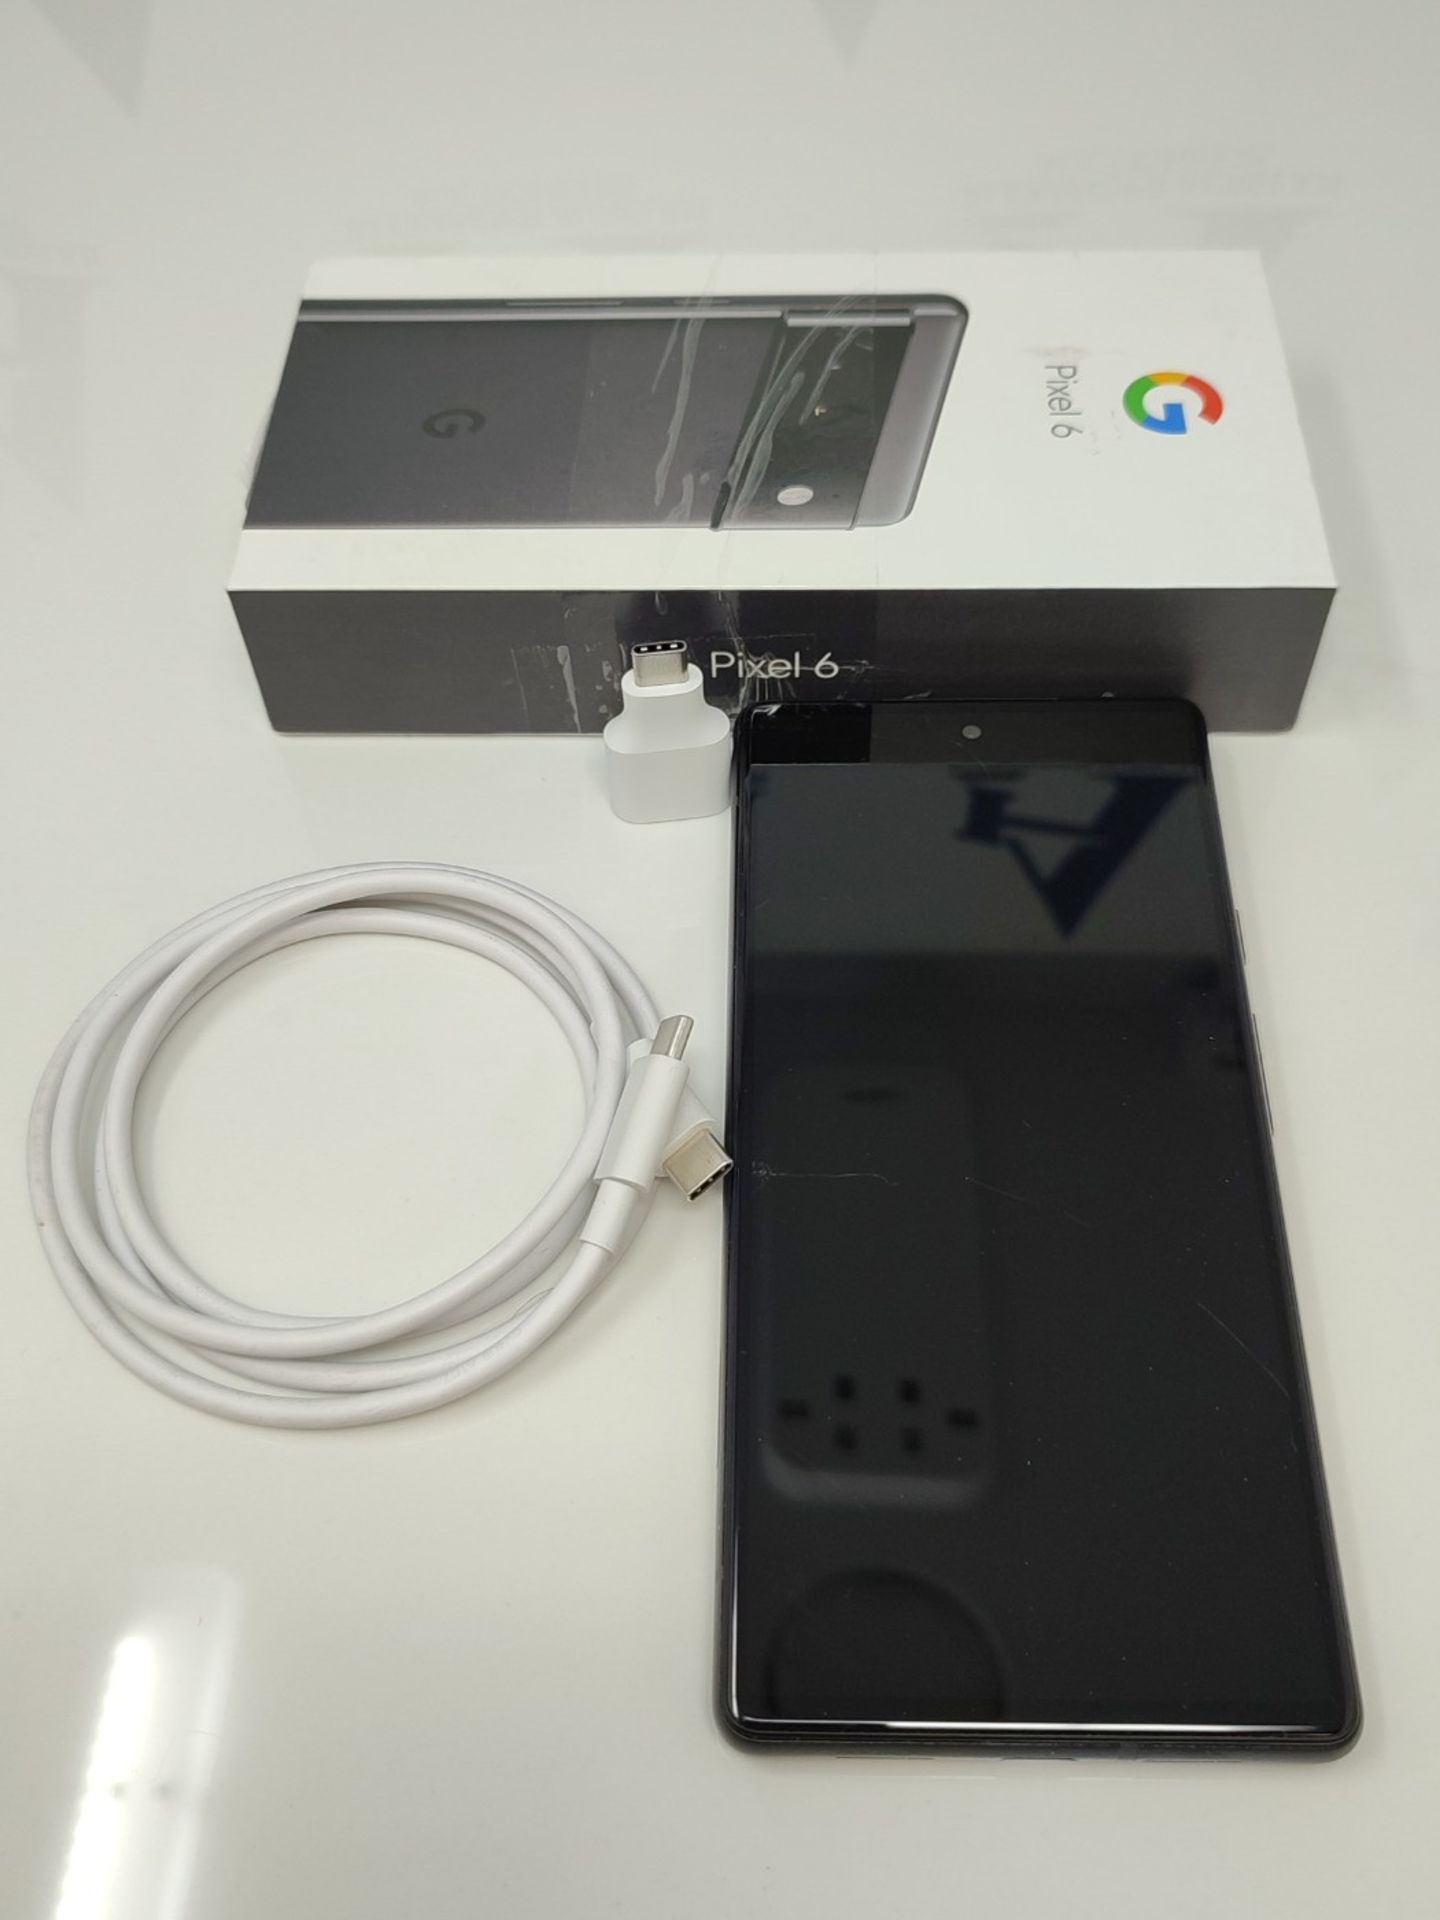 RRP £592.00 Google Pixel 6  Android 5G Smartphone with 50 Megapixel Camera and Wide-Angle Lens - Image 2 of 3